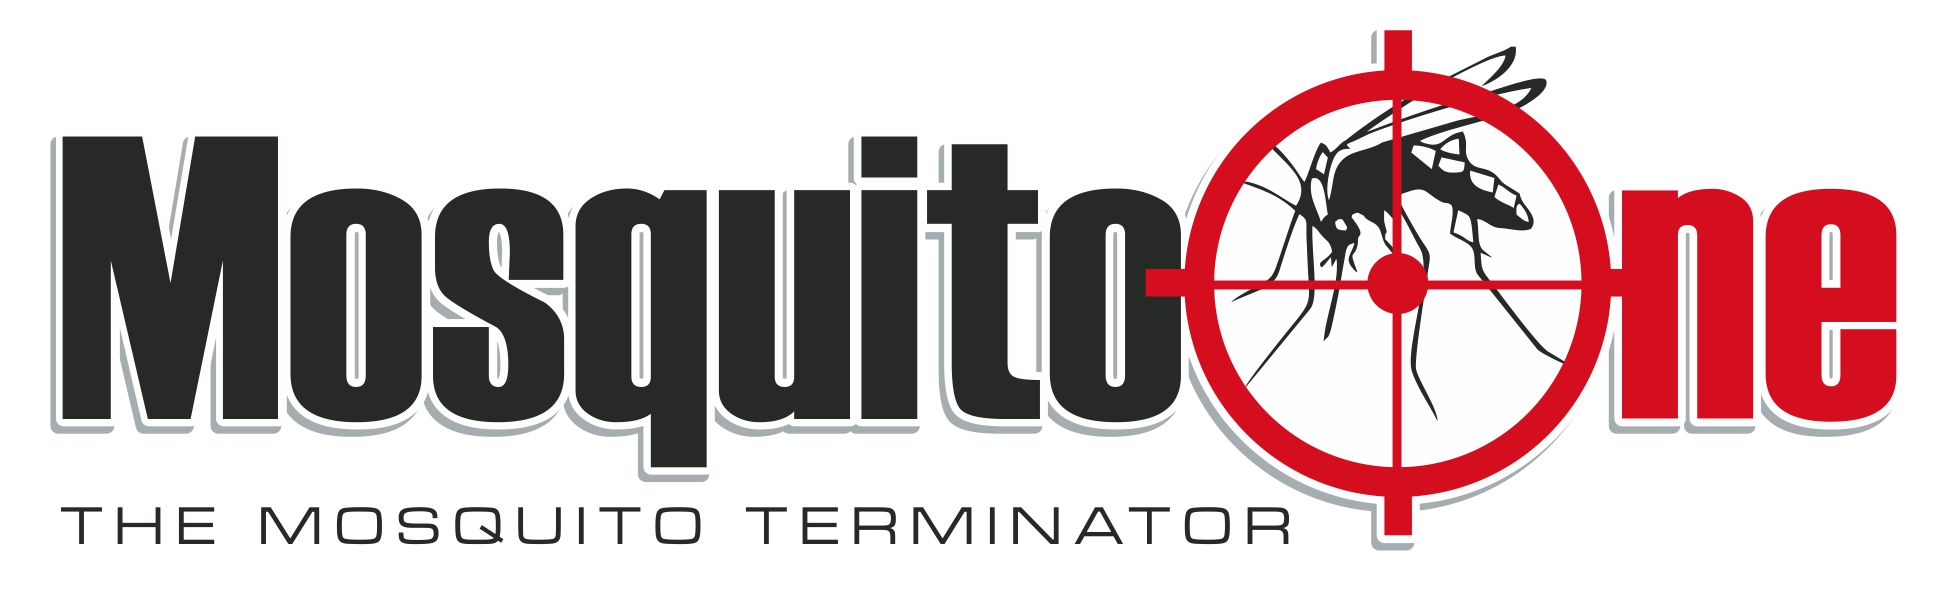 Mosquito Control of Michigan Inc. Logo